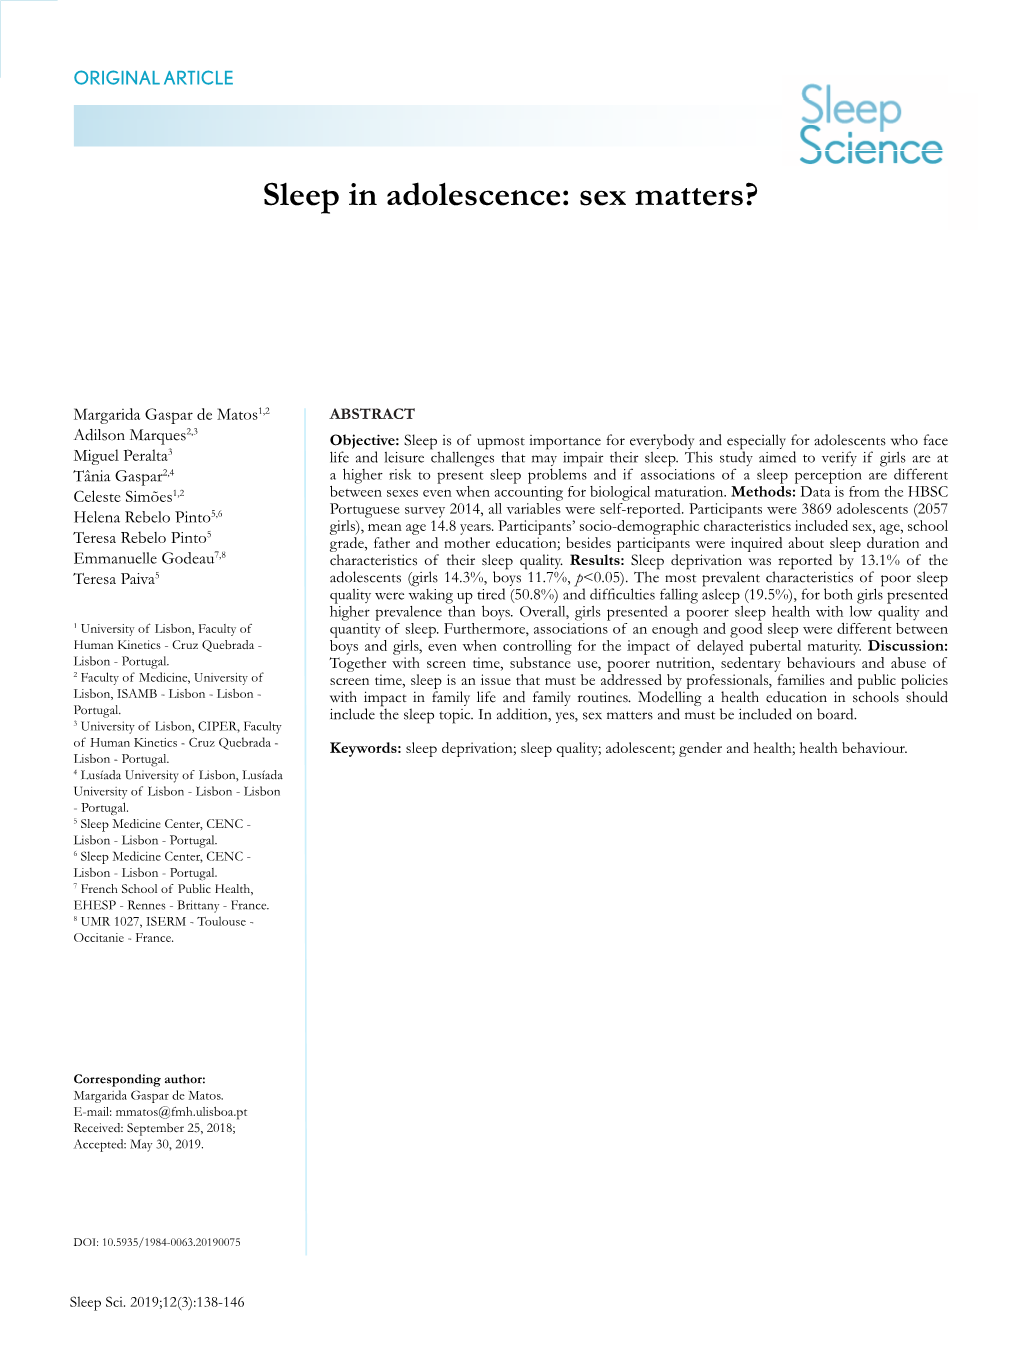 Sleep in Adolescence: Sex Matters?